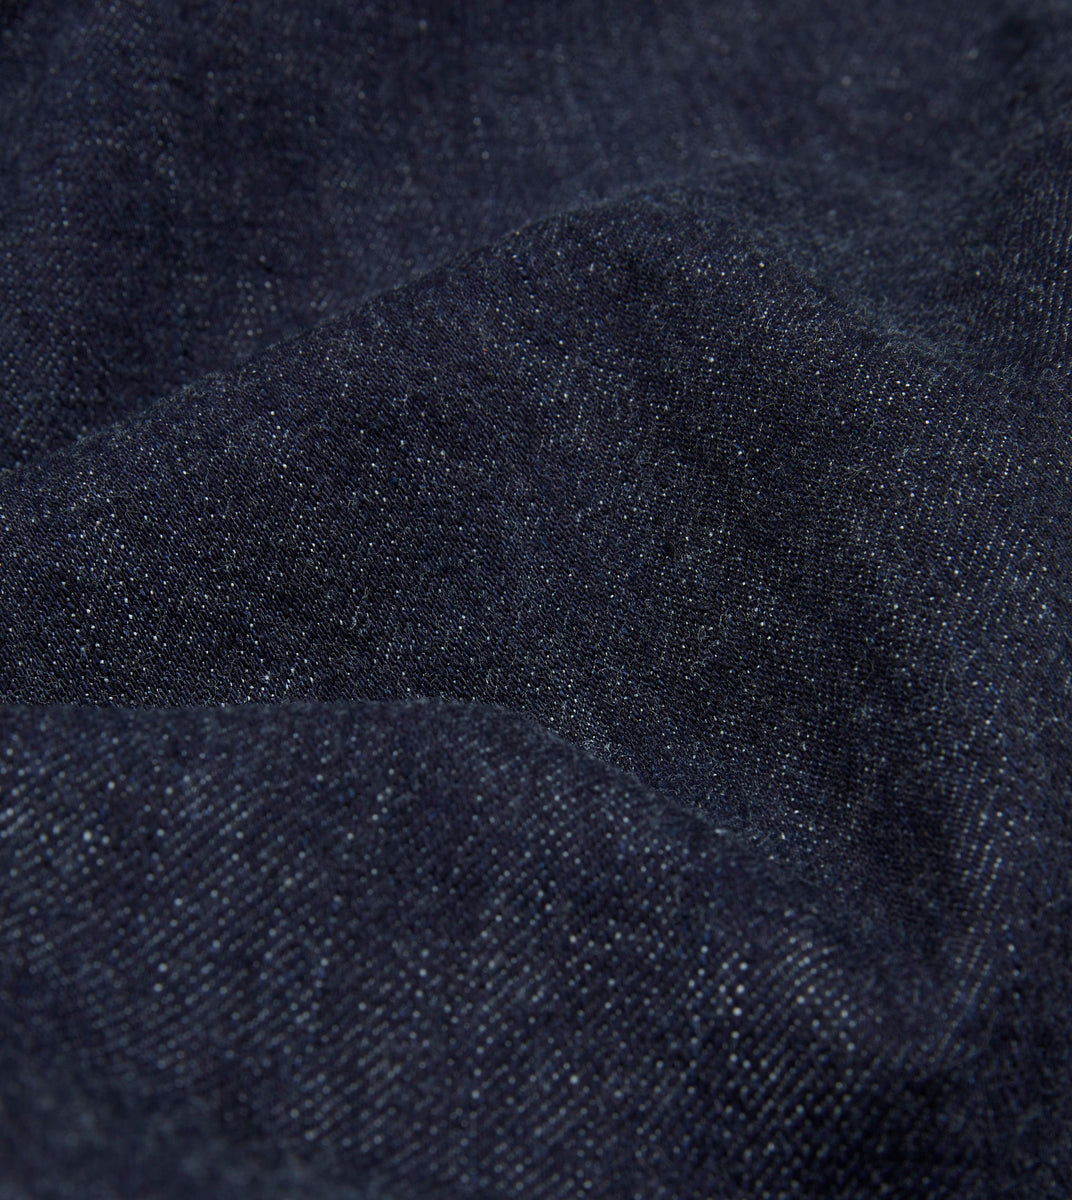 14.2oz Drakes Selvedge Five-Pocket – Denim Japanese Indigo Rinse Jeans